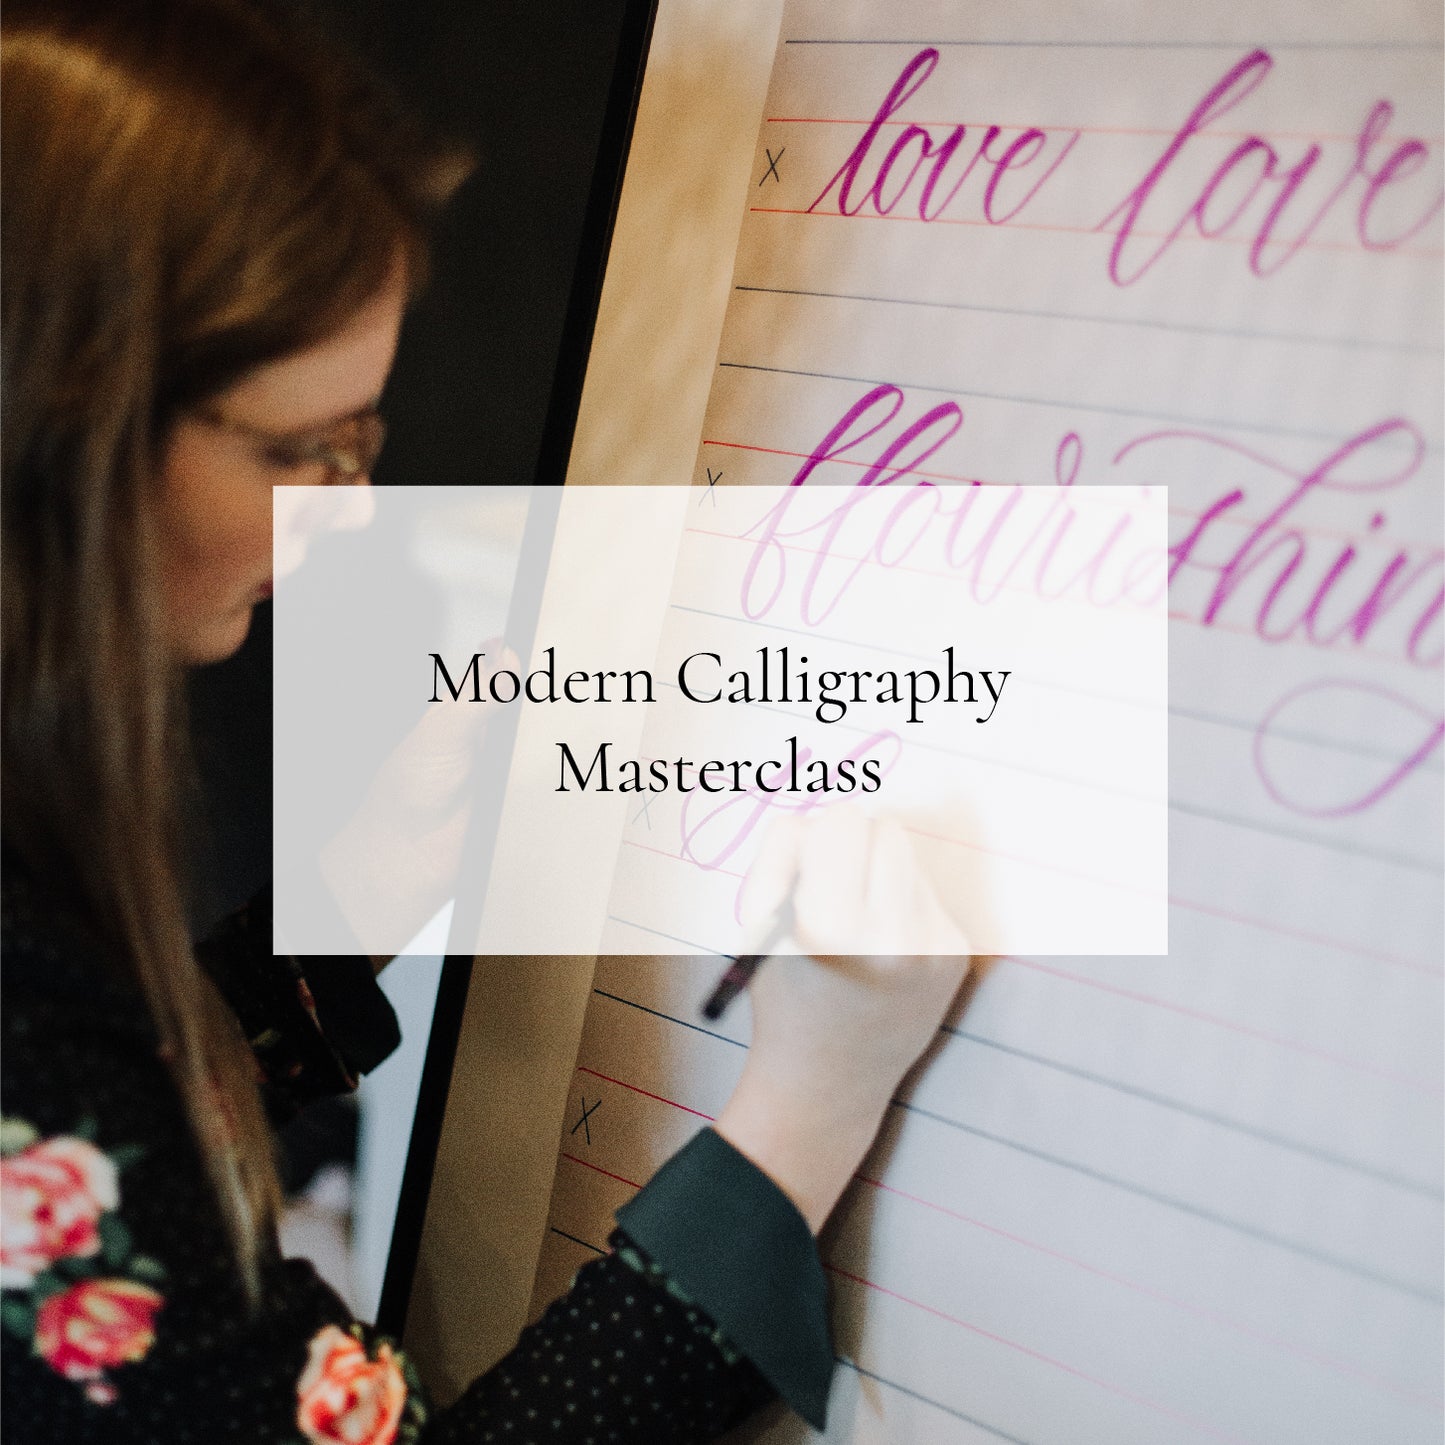 The Modern Calligraphy Masterclass